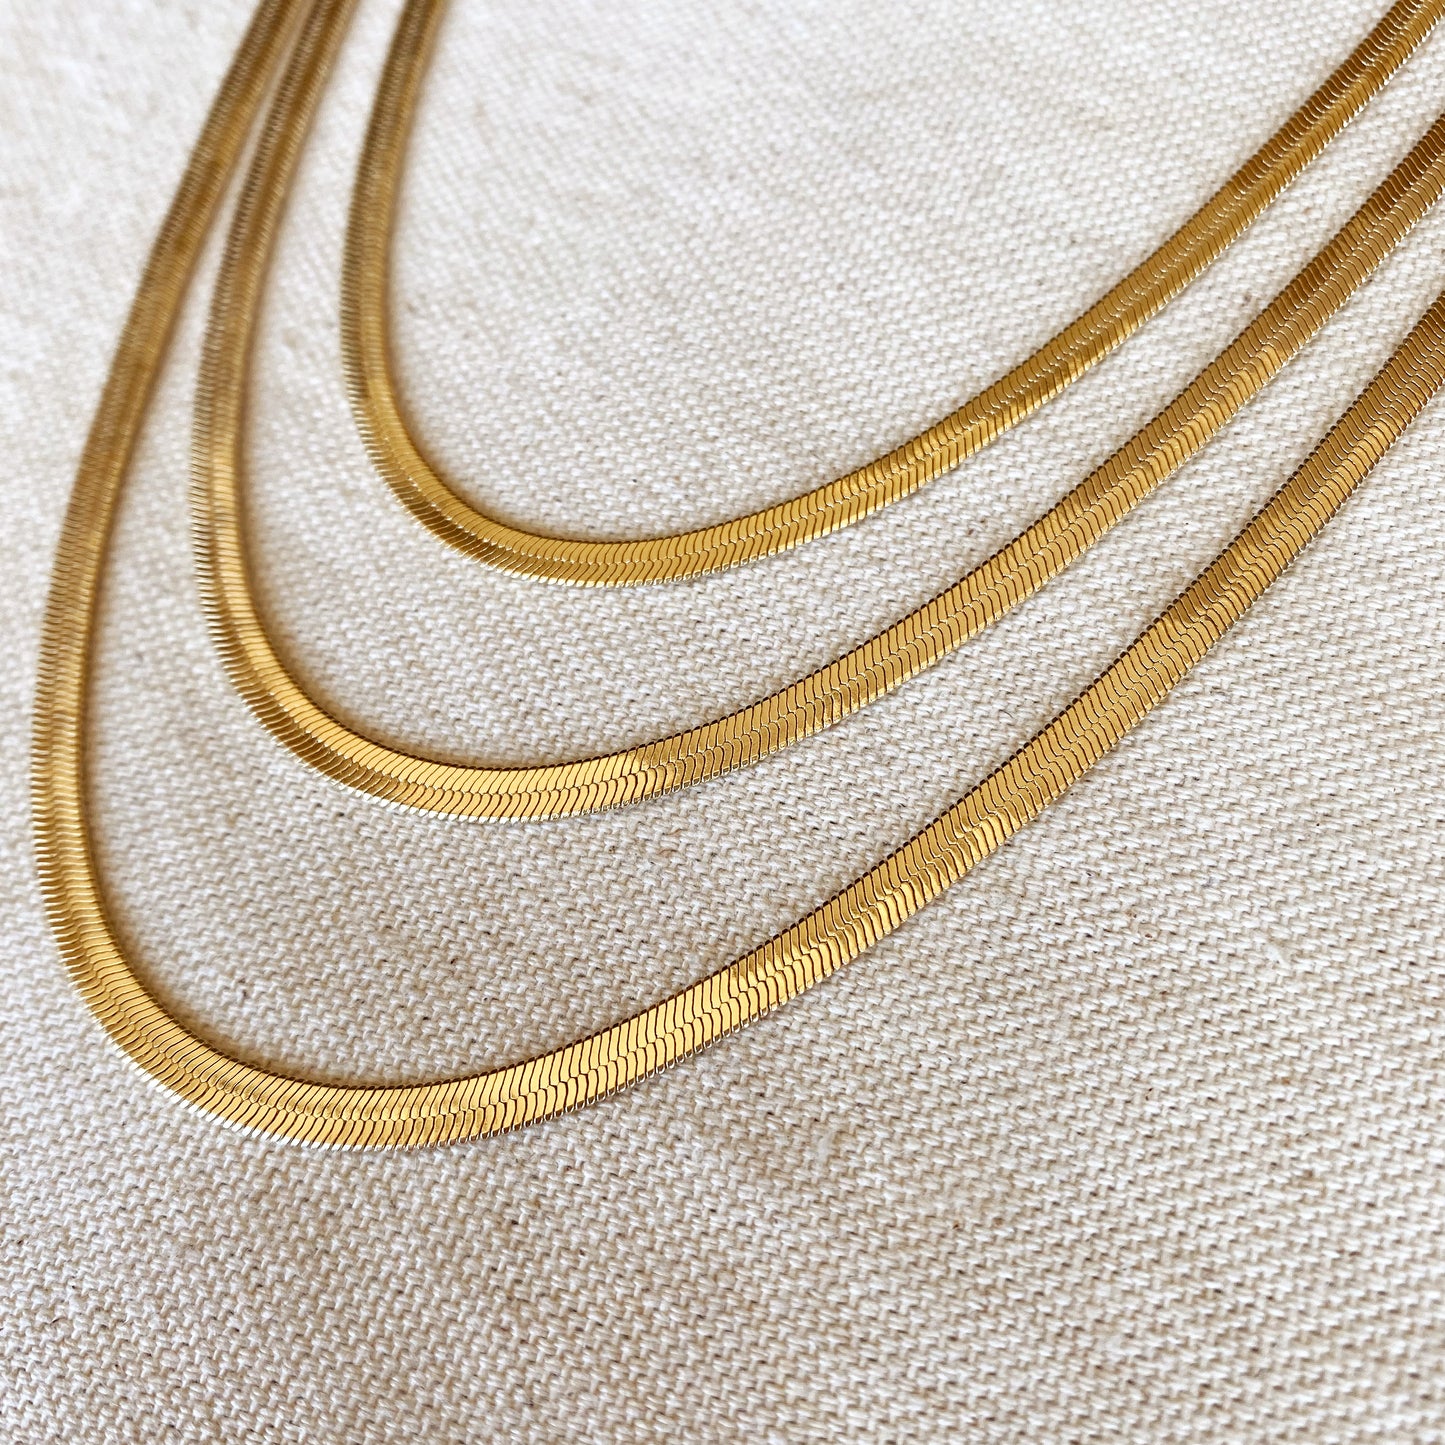 GoldFi 18k Gold Filled 4.0mm Thickness Herringbone Chain